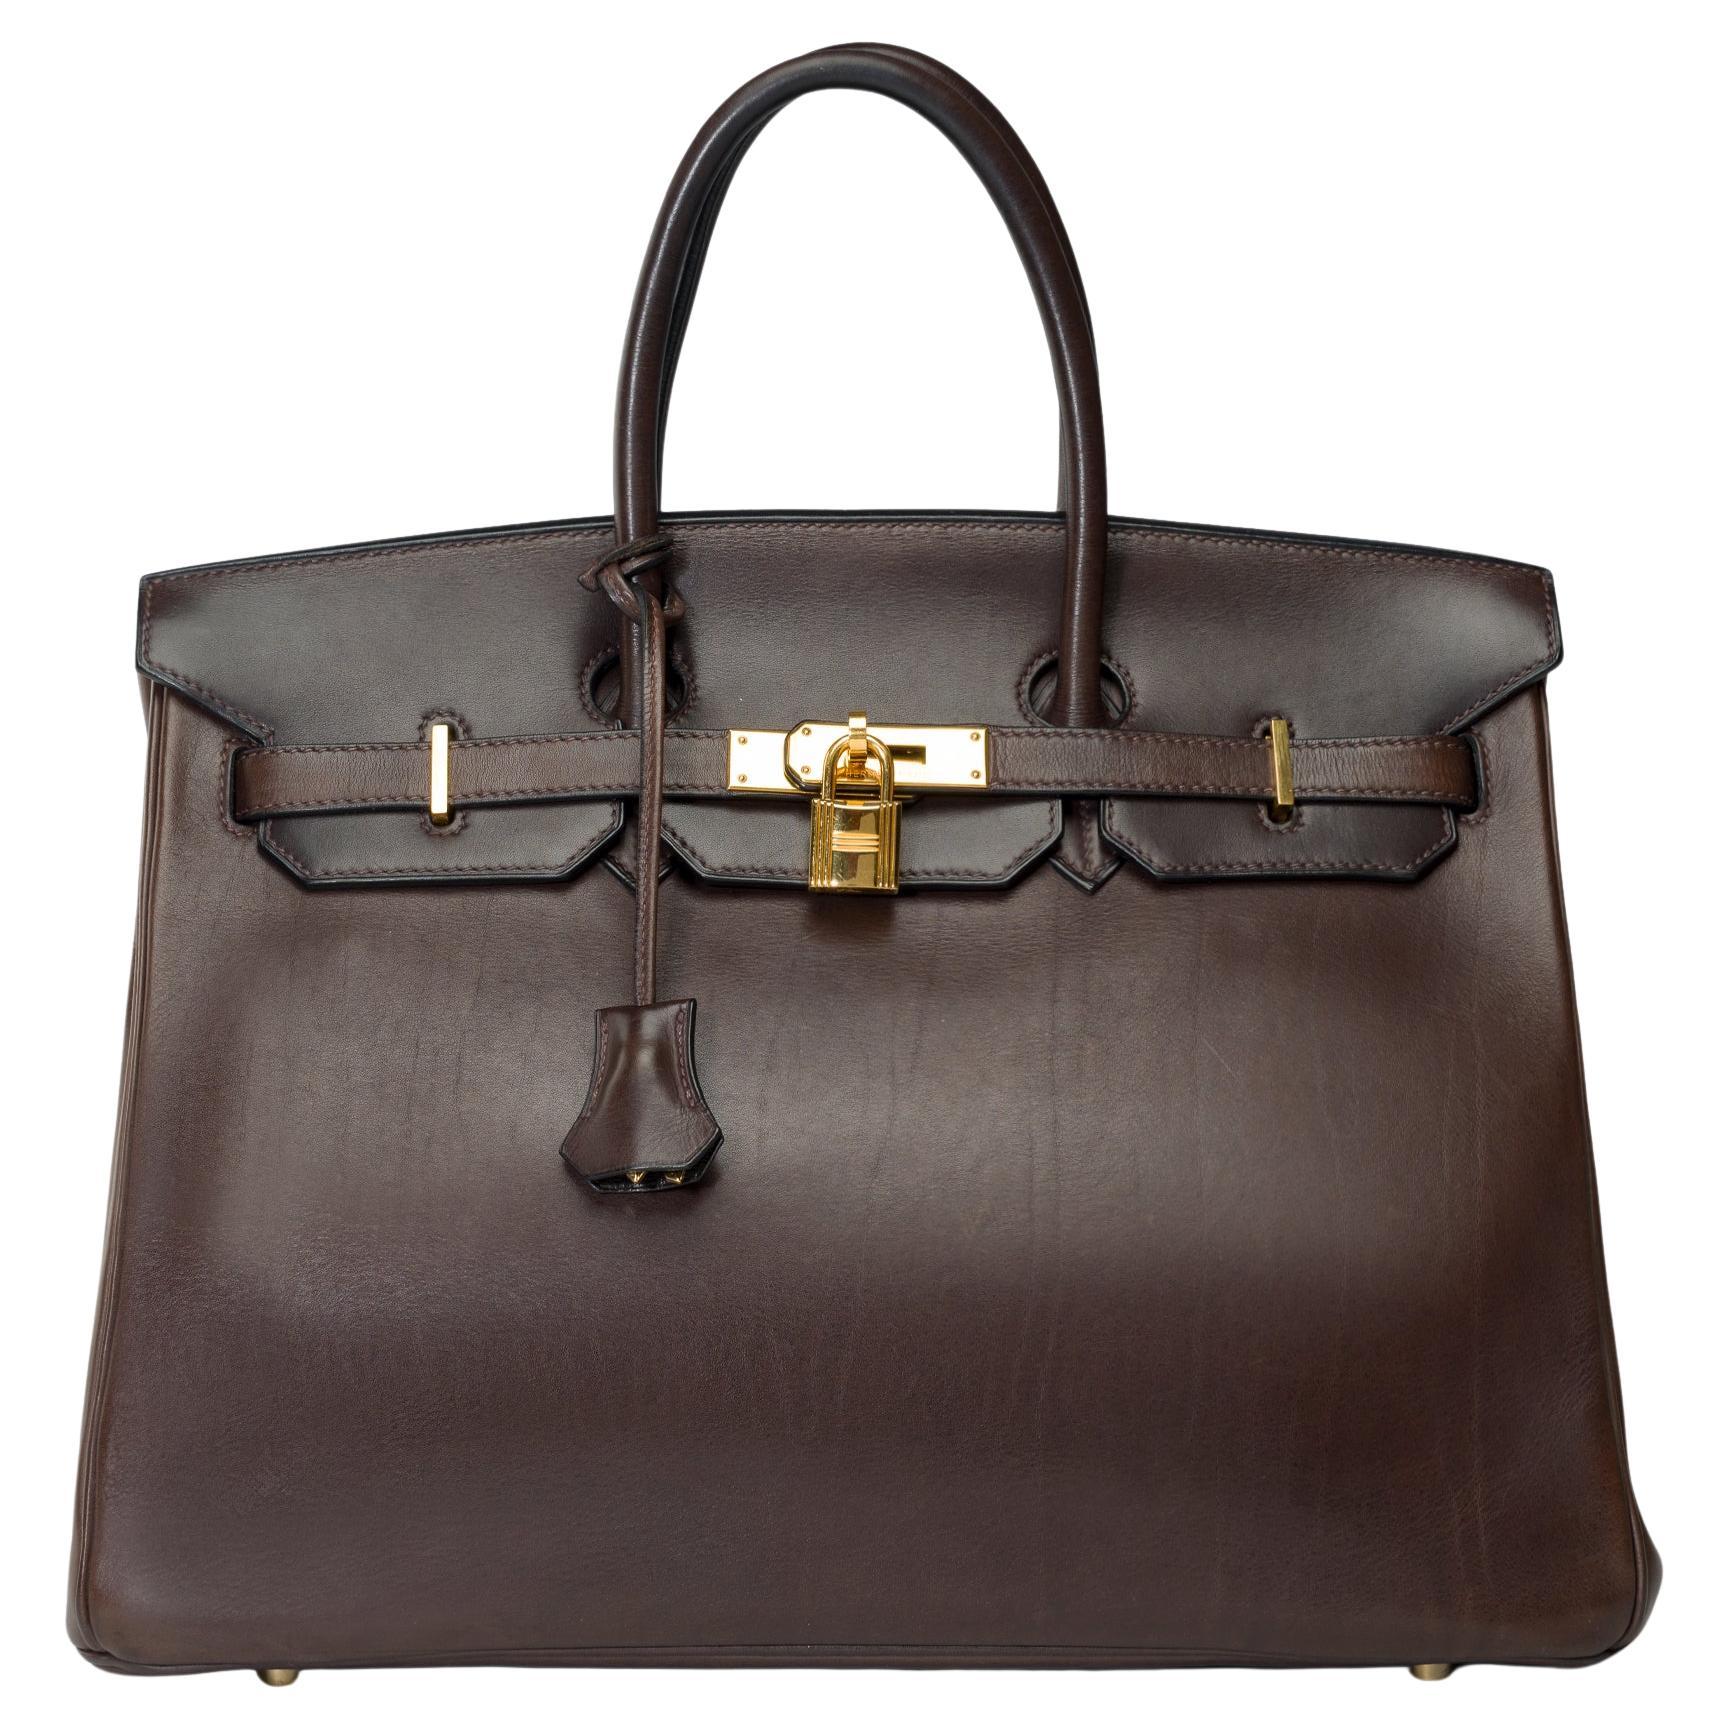 Rare & Exceptional Hermès Birkin 35 handbag in Ebony Brown Barenia leather, GHW For Sale